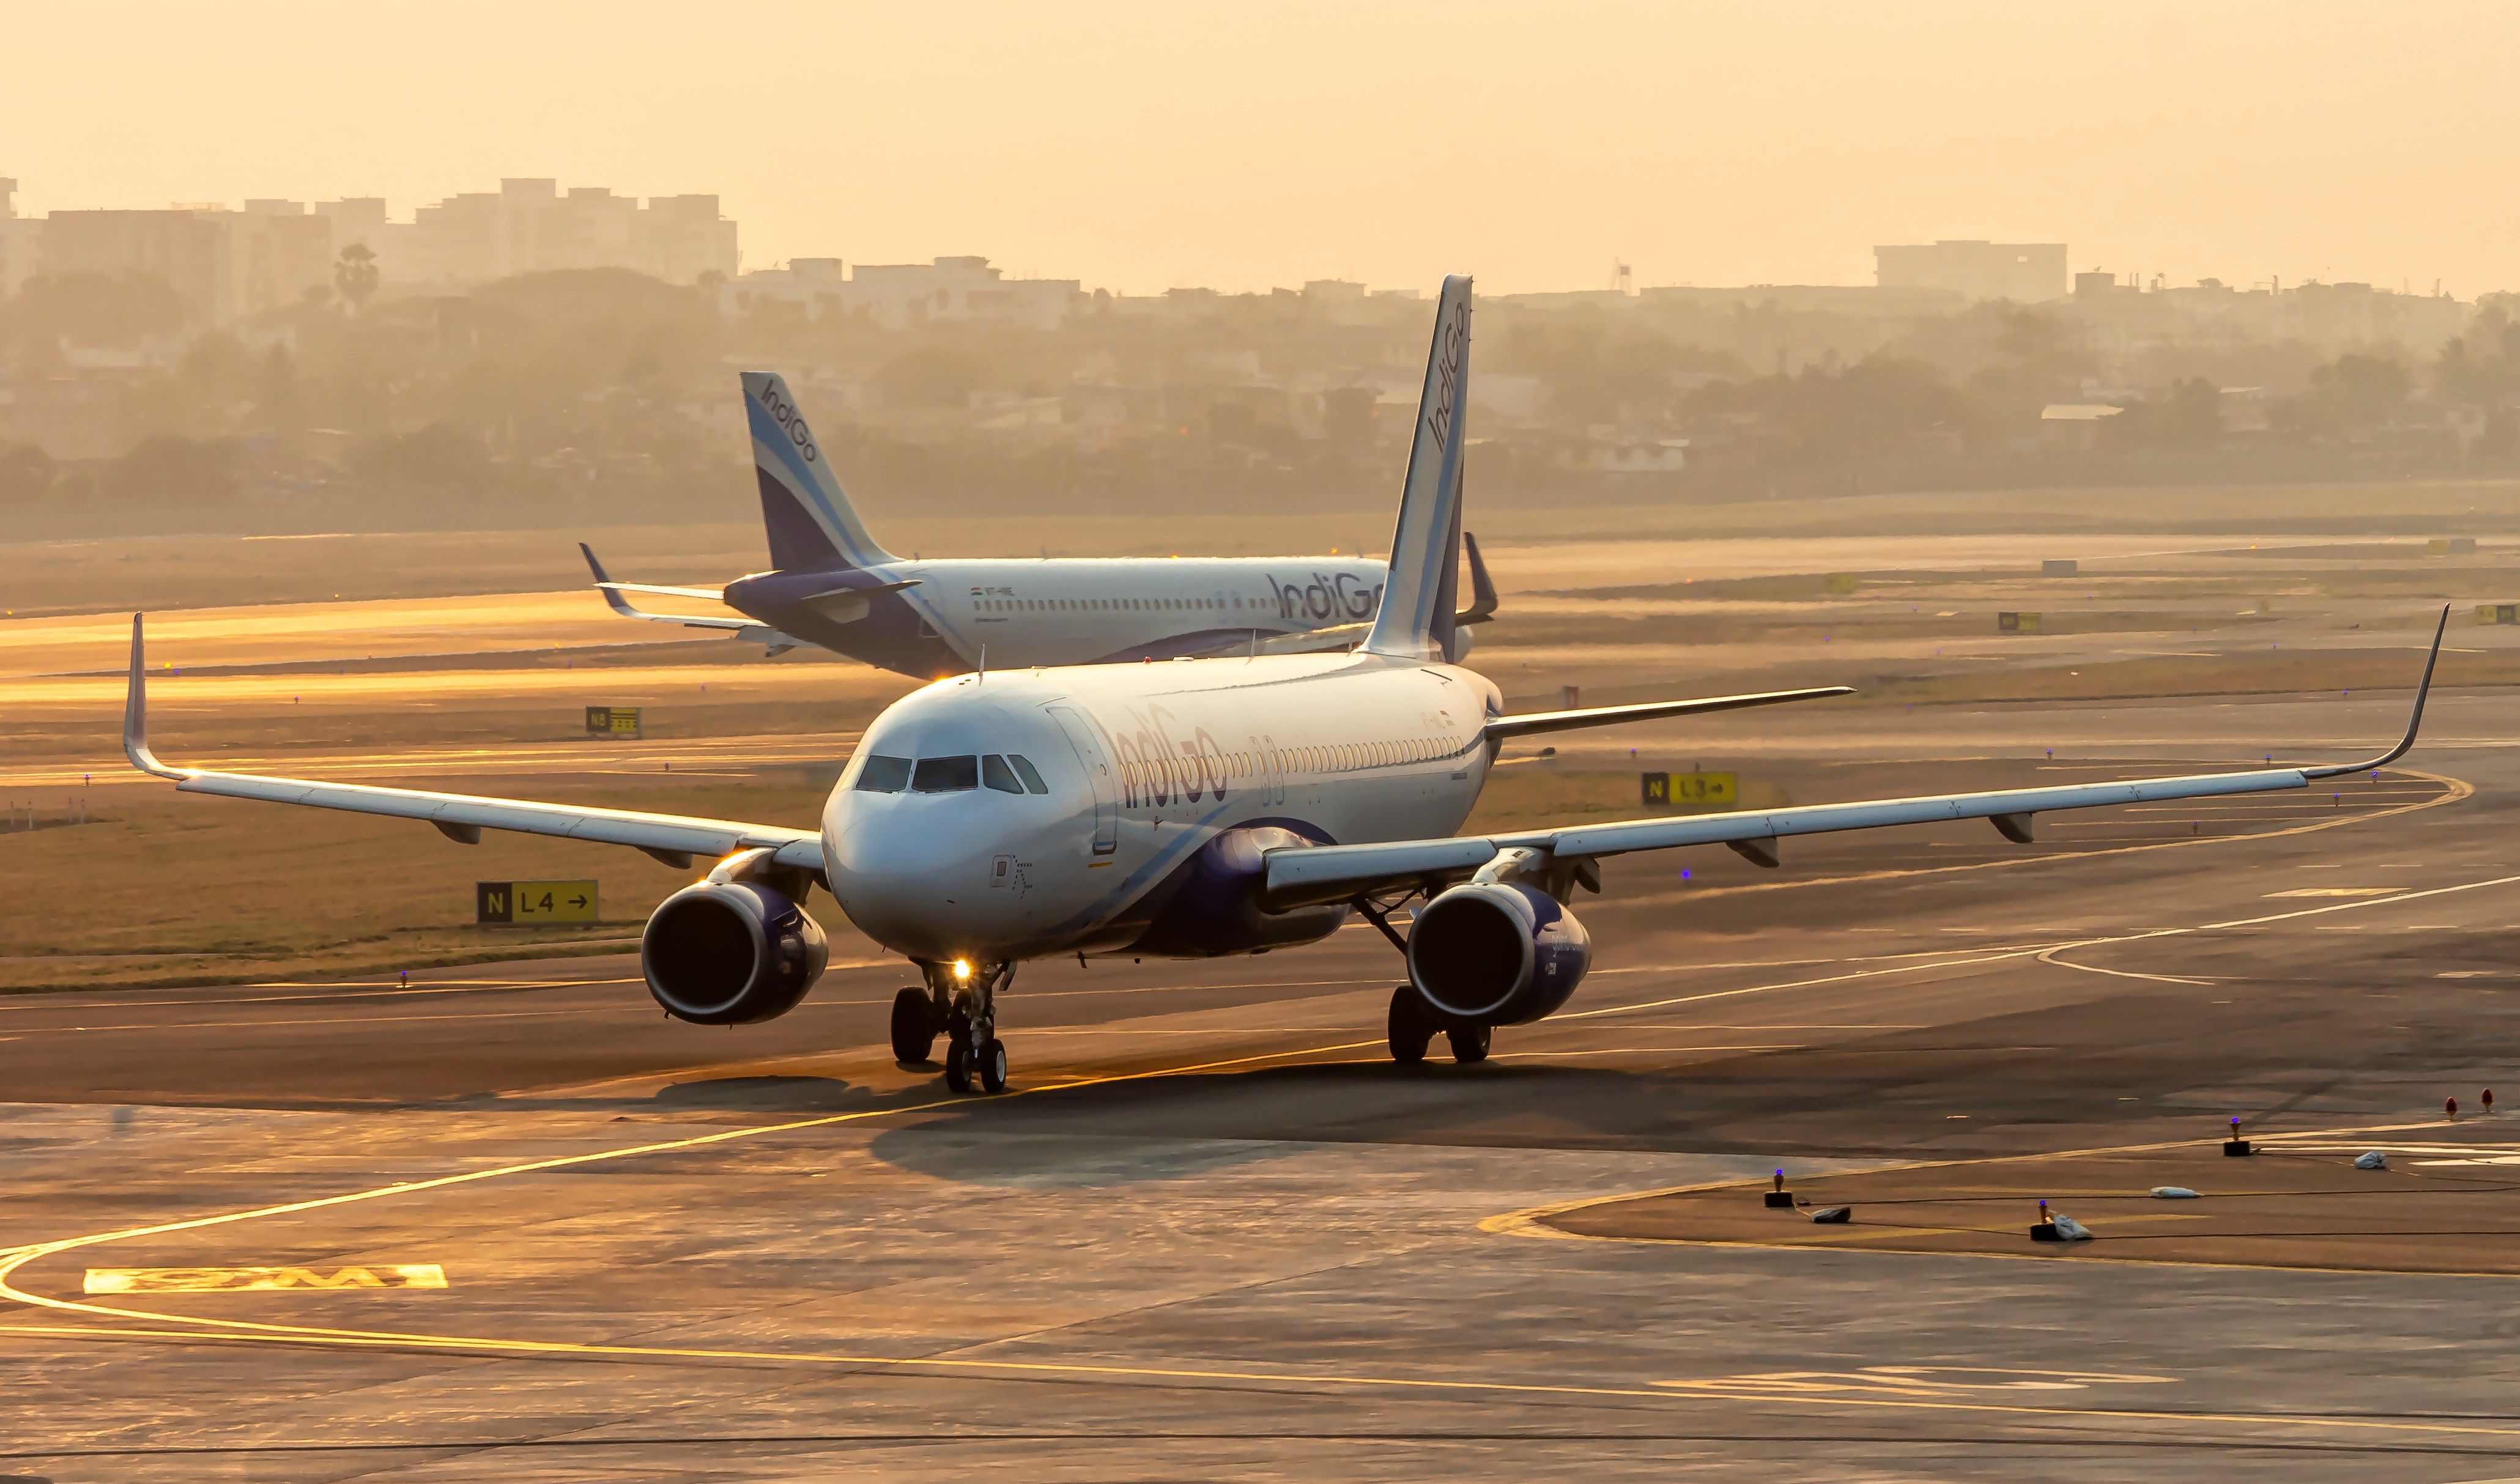 Samolot IndiGo Airbus A320 kołujący do pasa startowego.